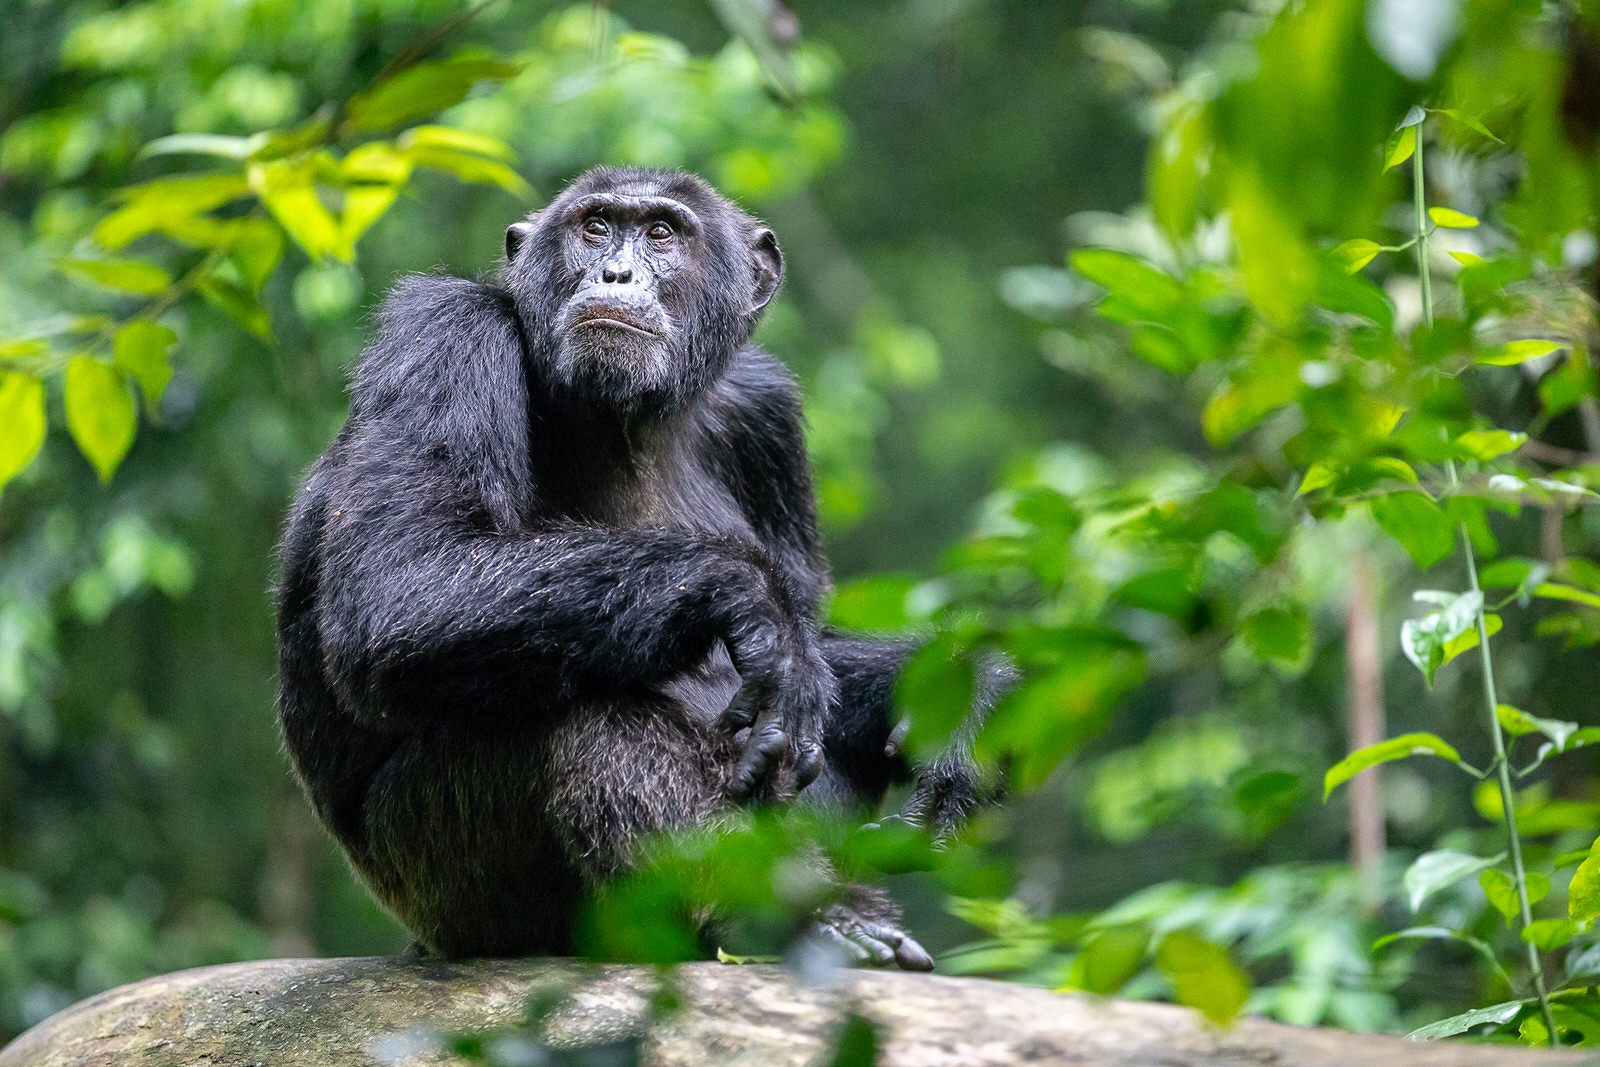 Chimpanzee Forest Lodge